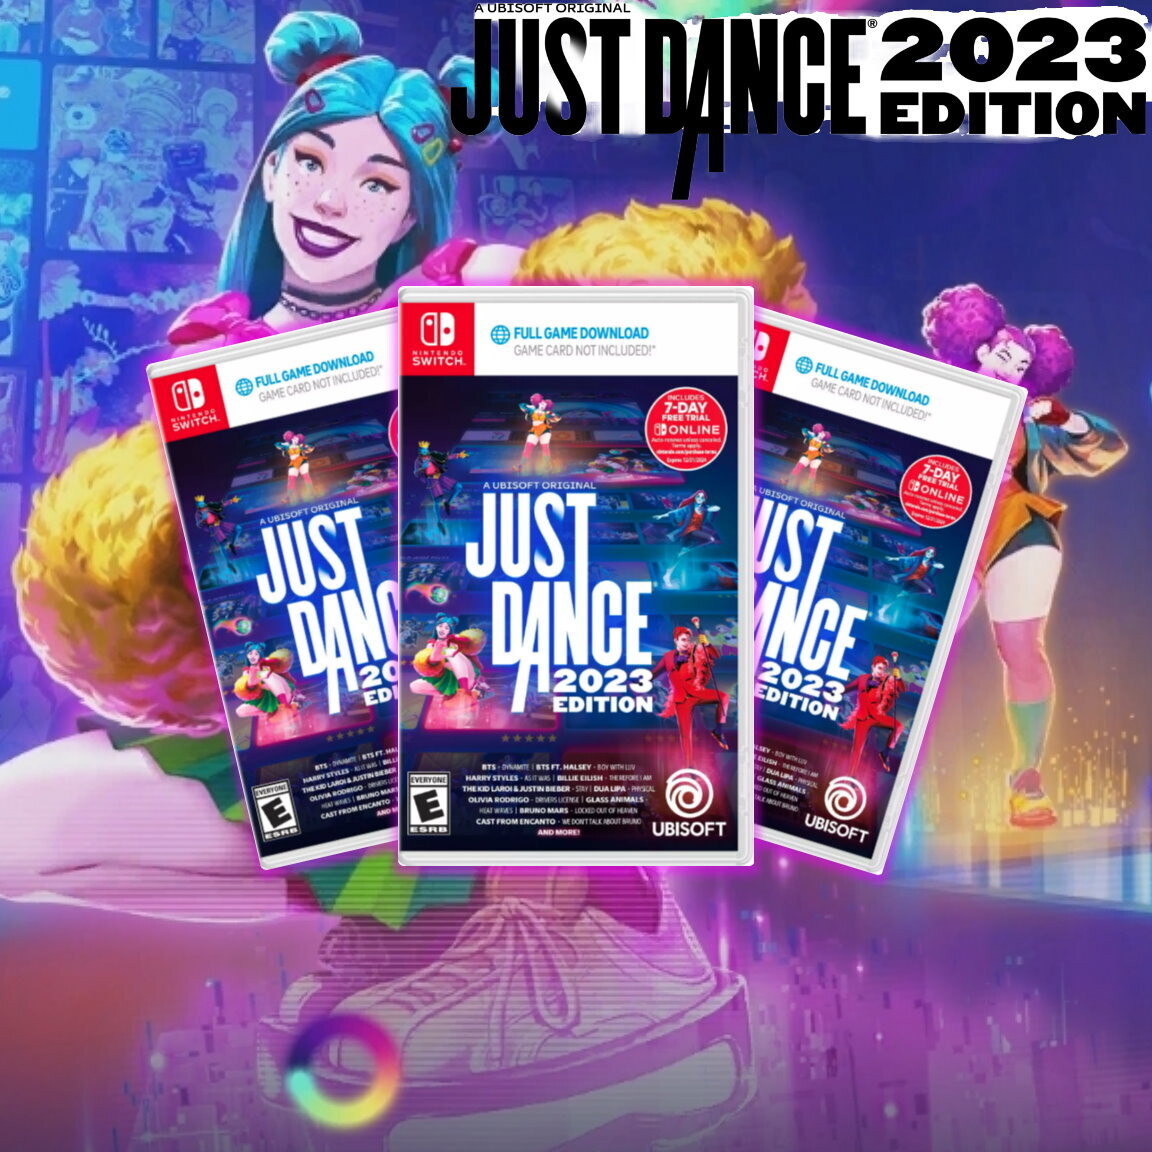 Nintendo (Code Dance 2023 - Switch in Just Box)